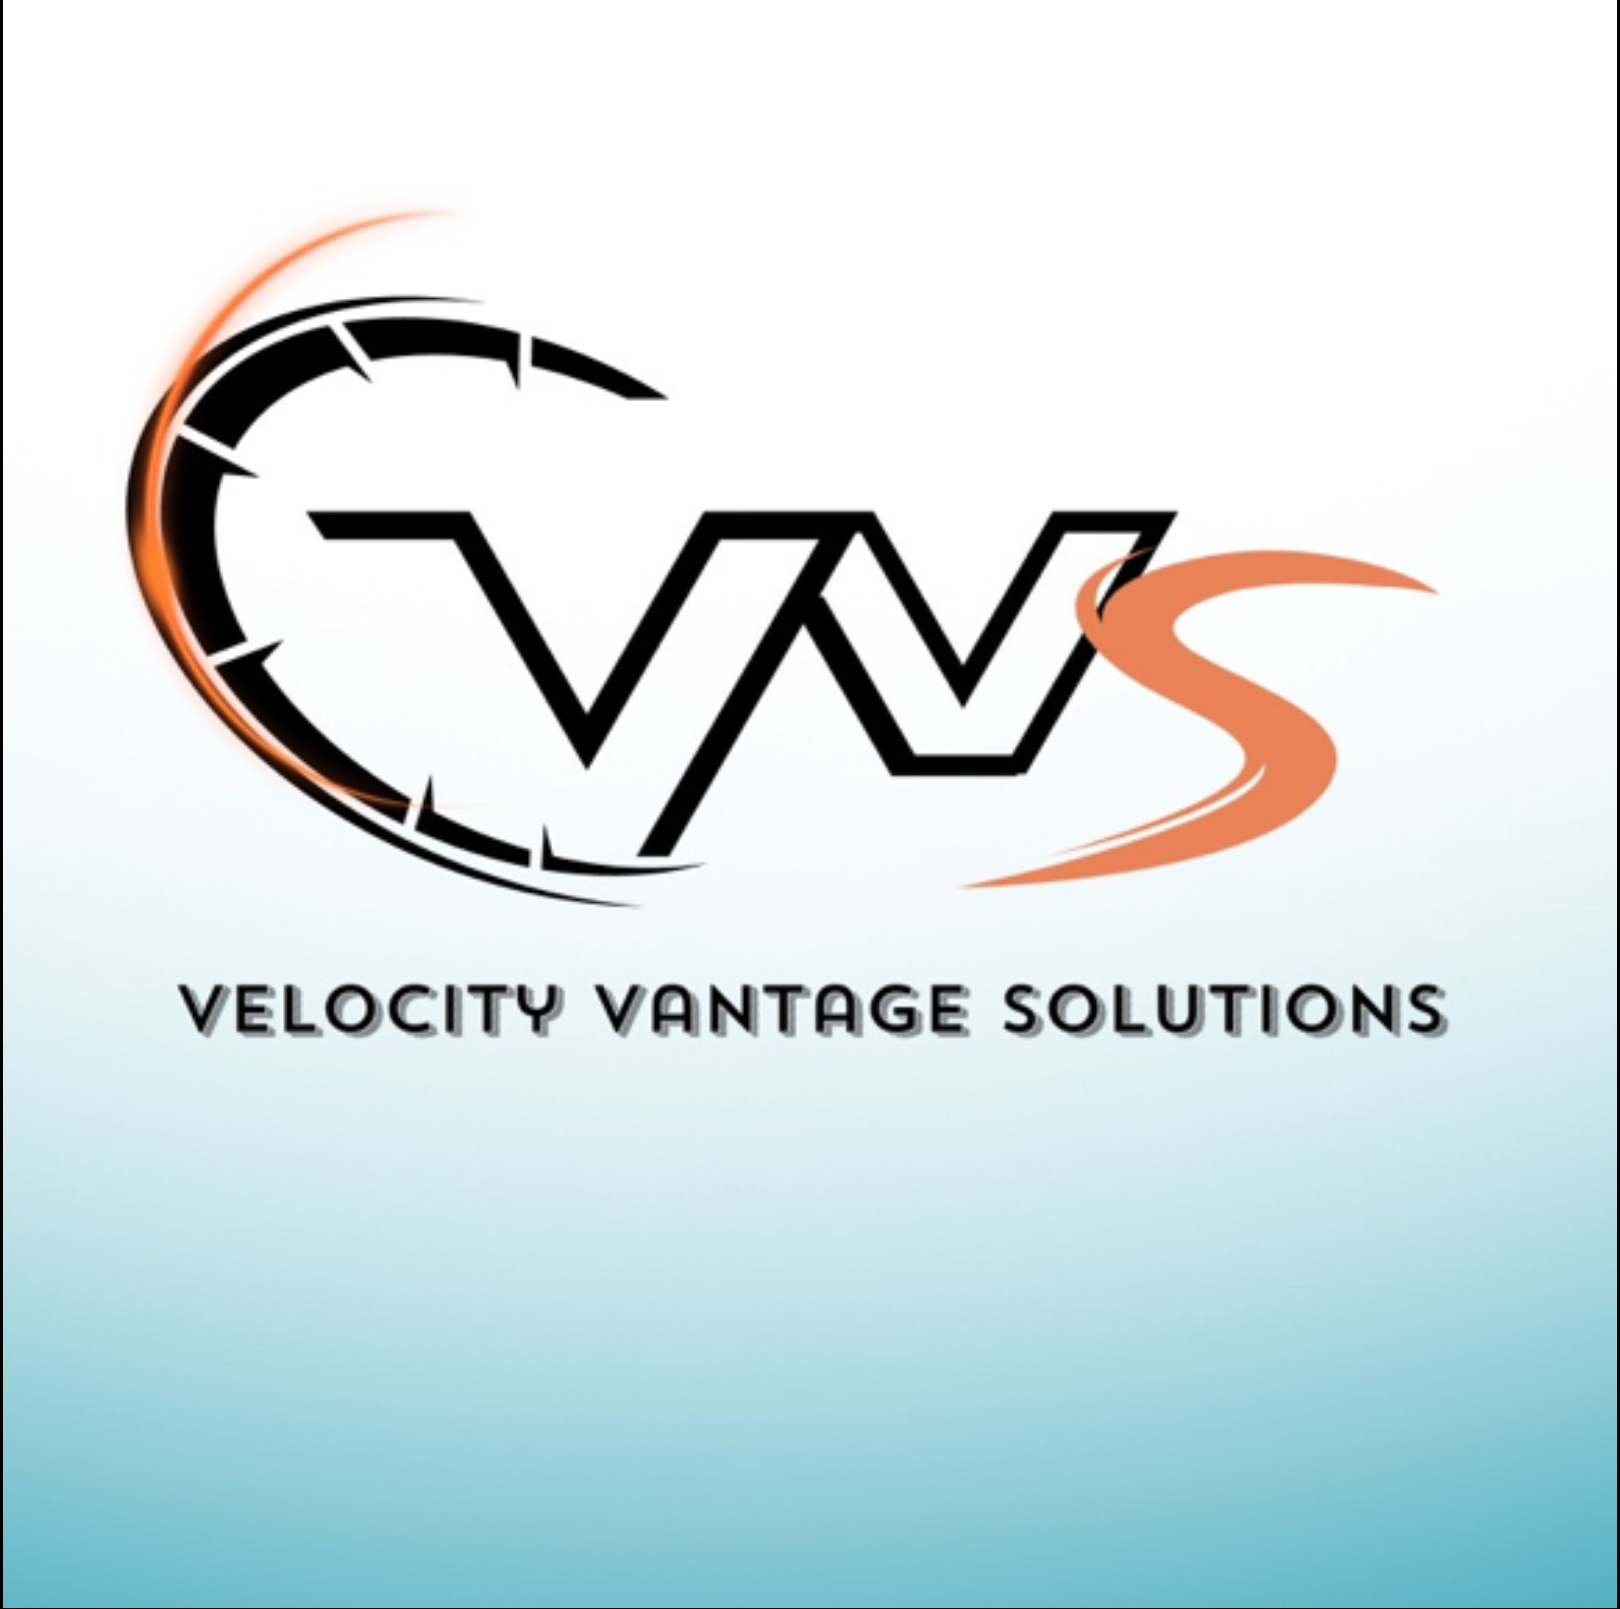 Velocity Vantage Solutions